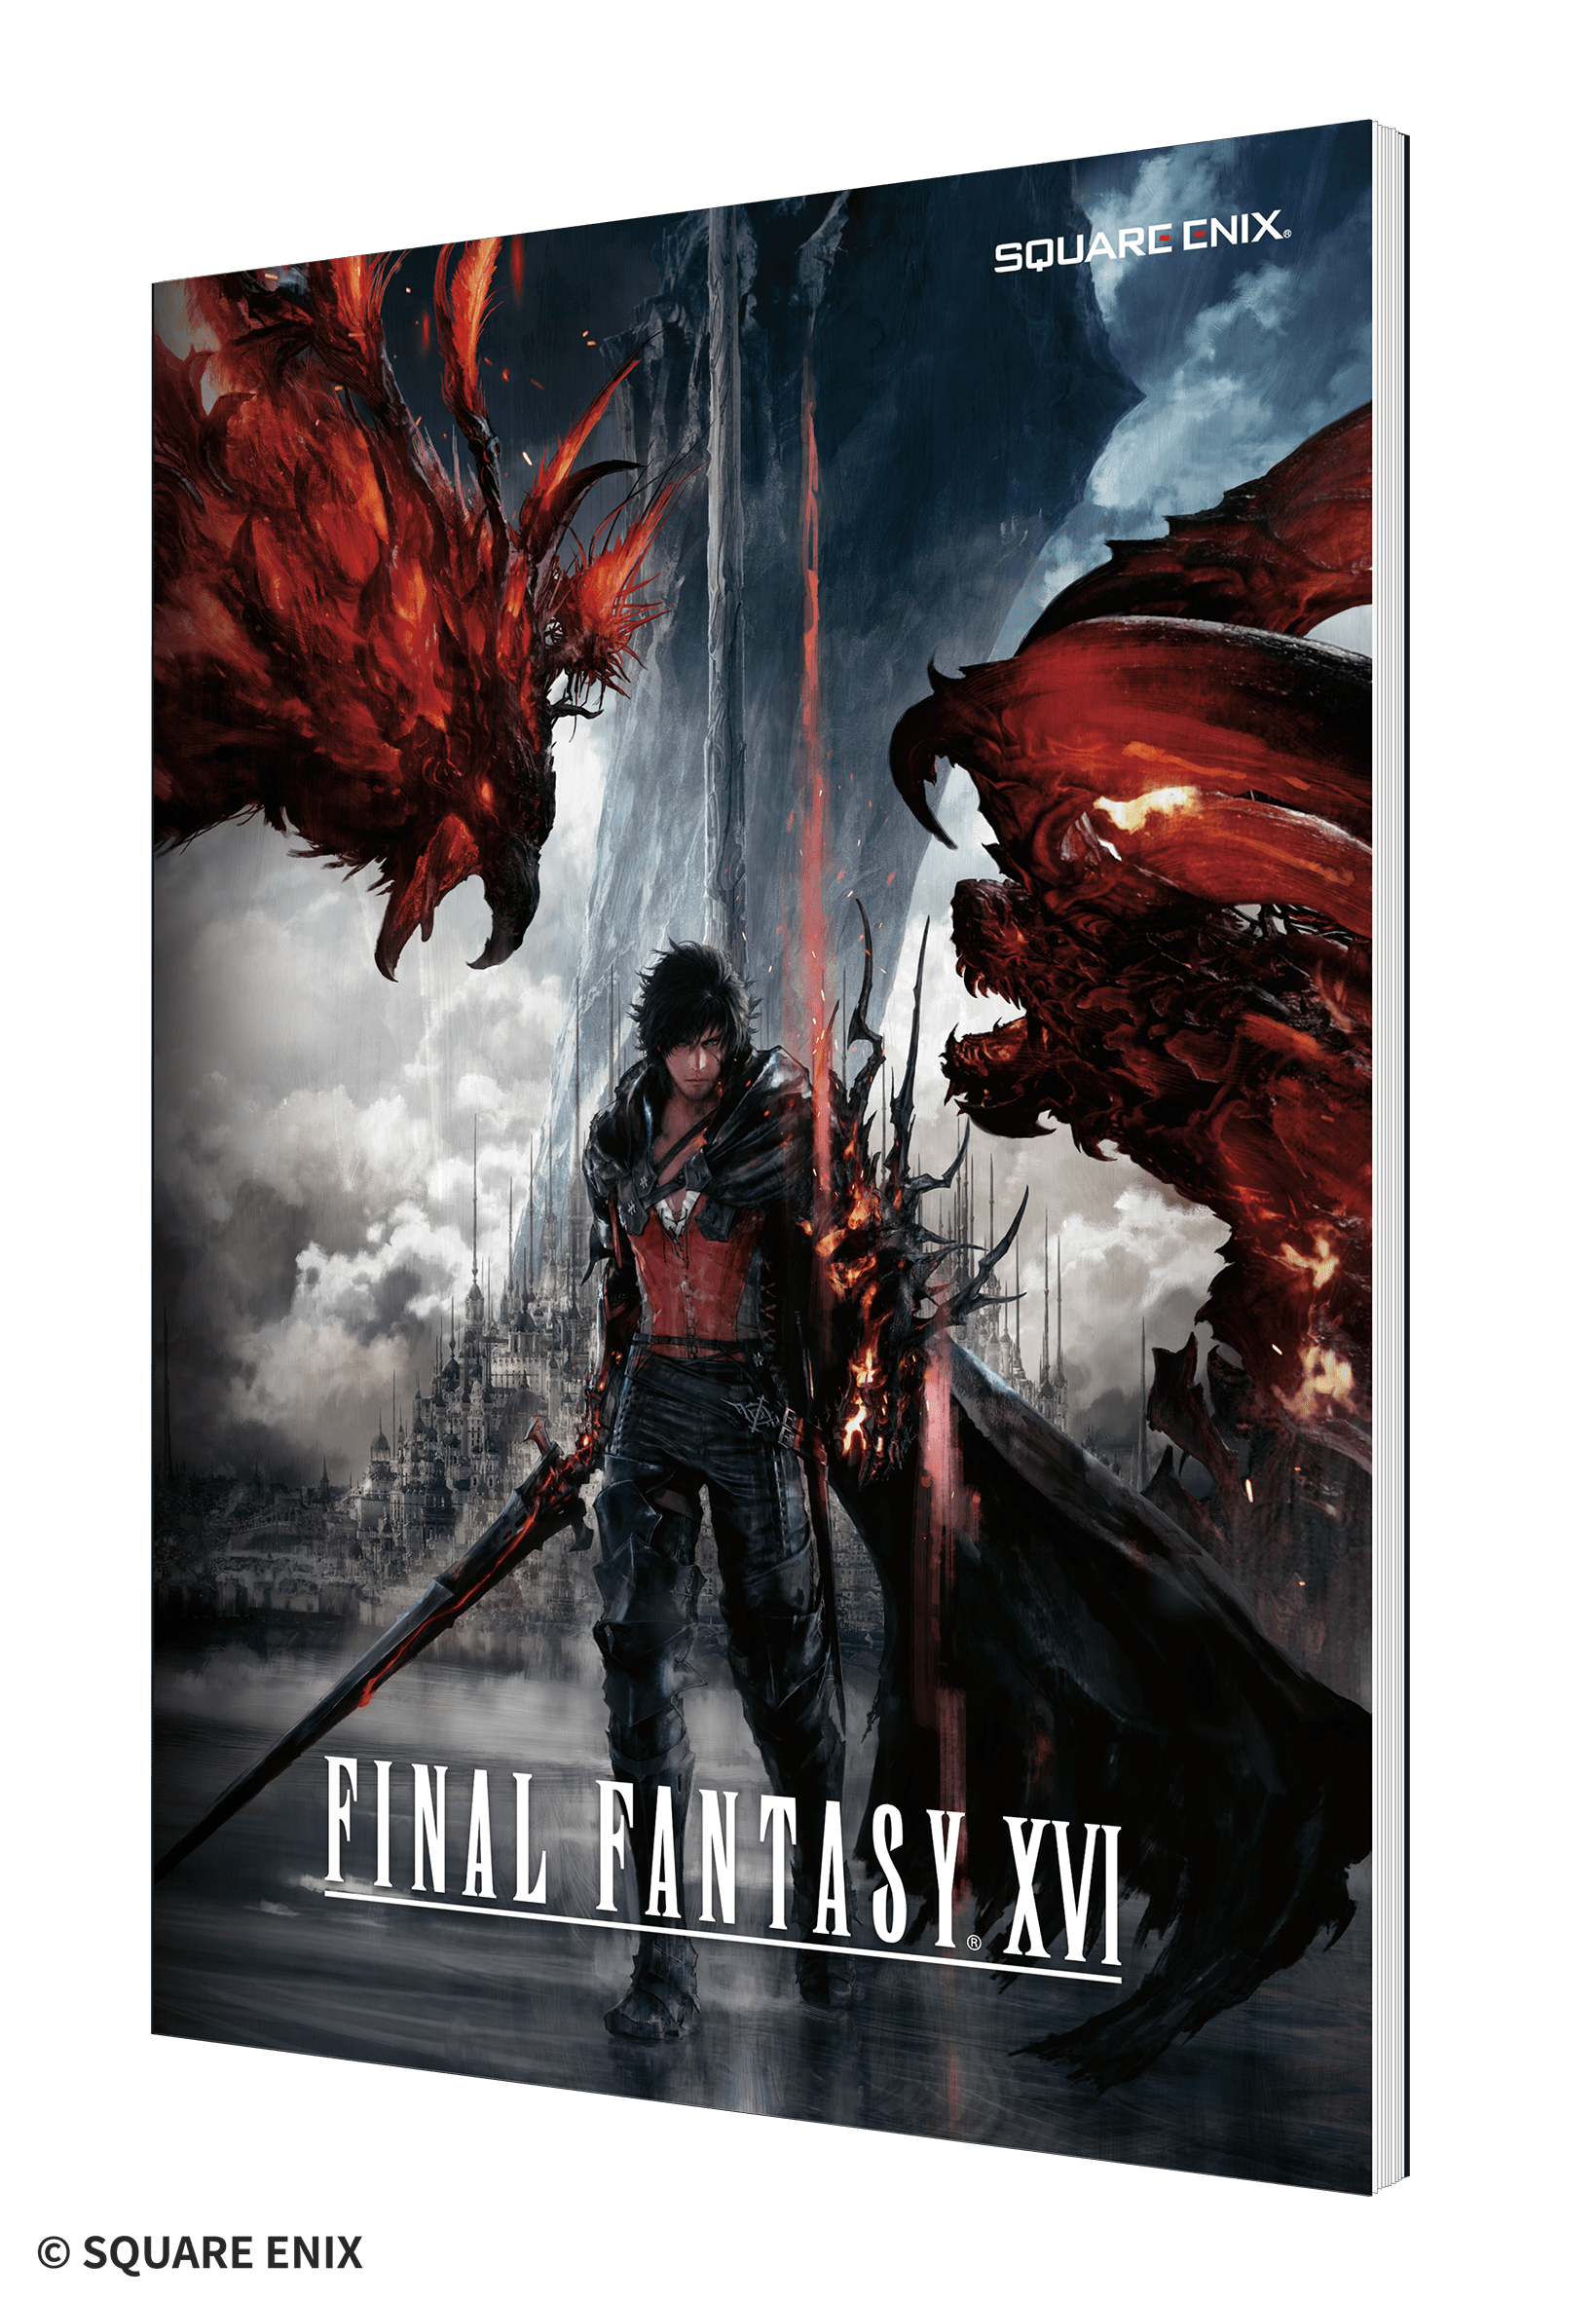 Final Fantasy XVI - State of Play presentation, details, and screenshots -  Gematsu